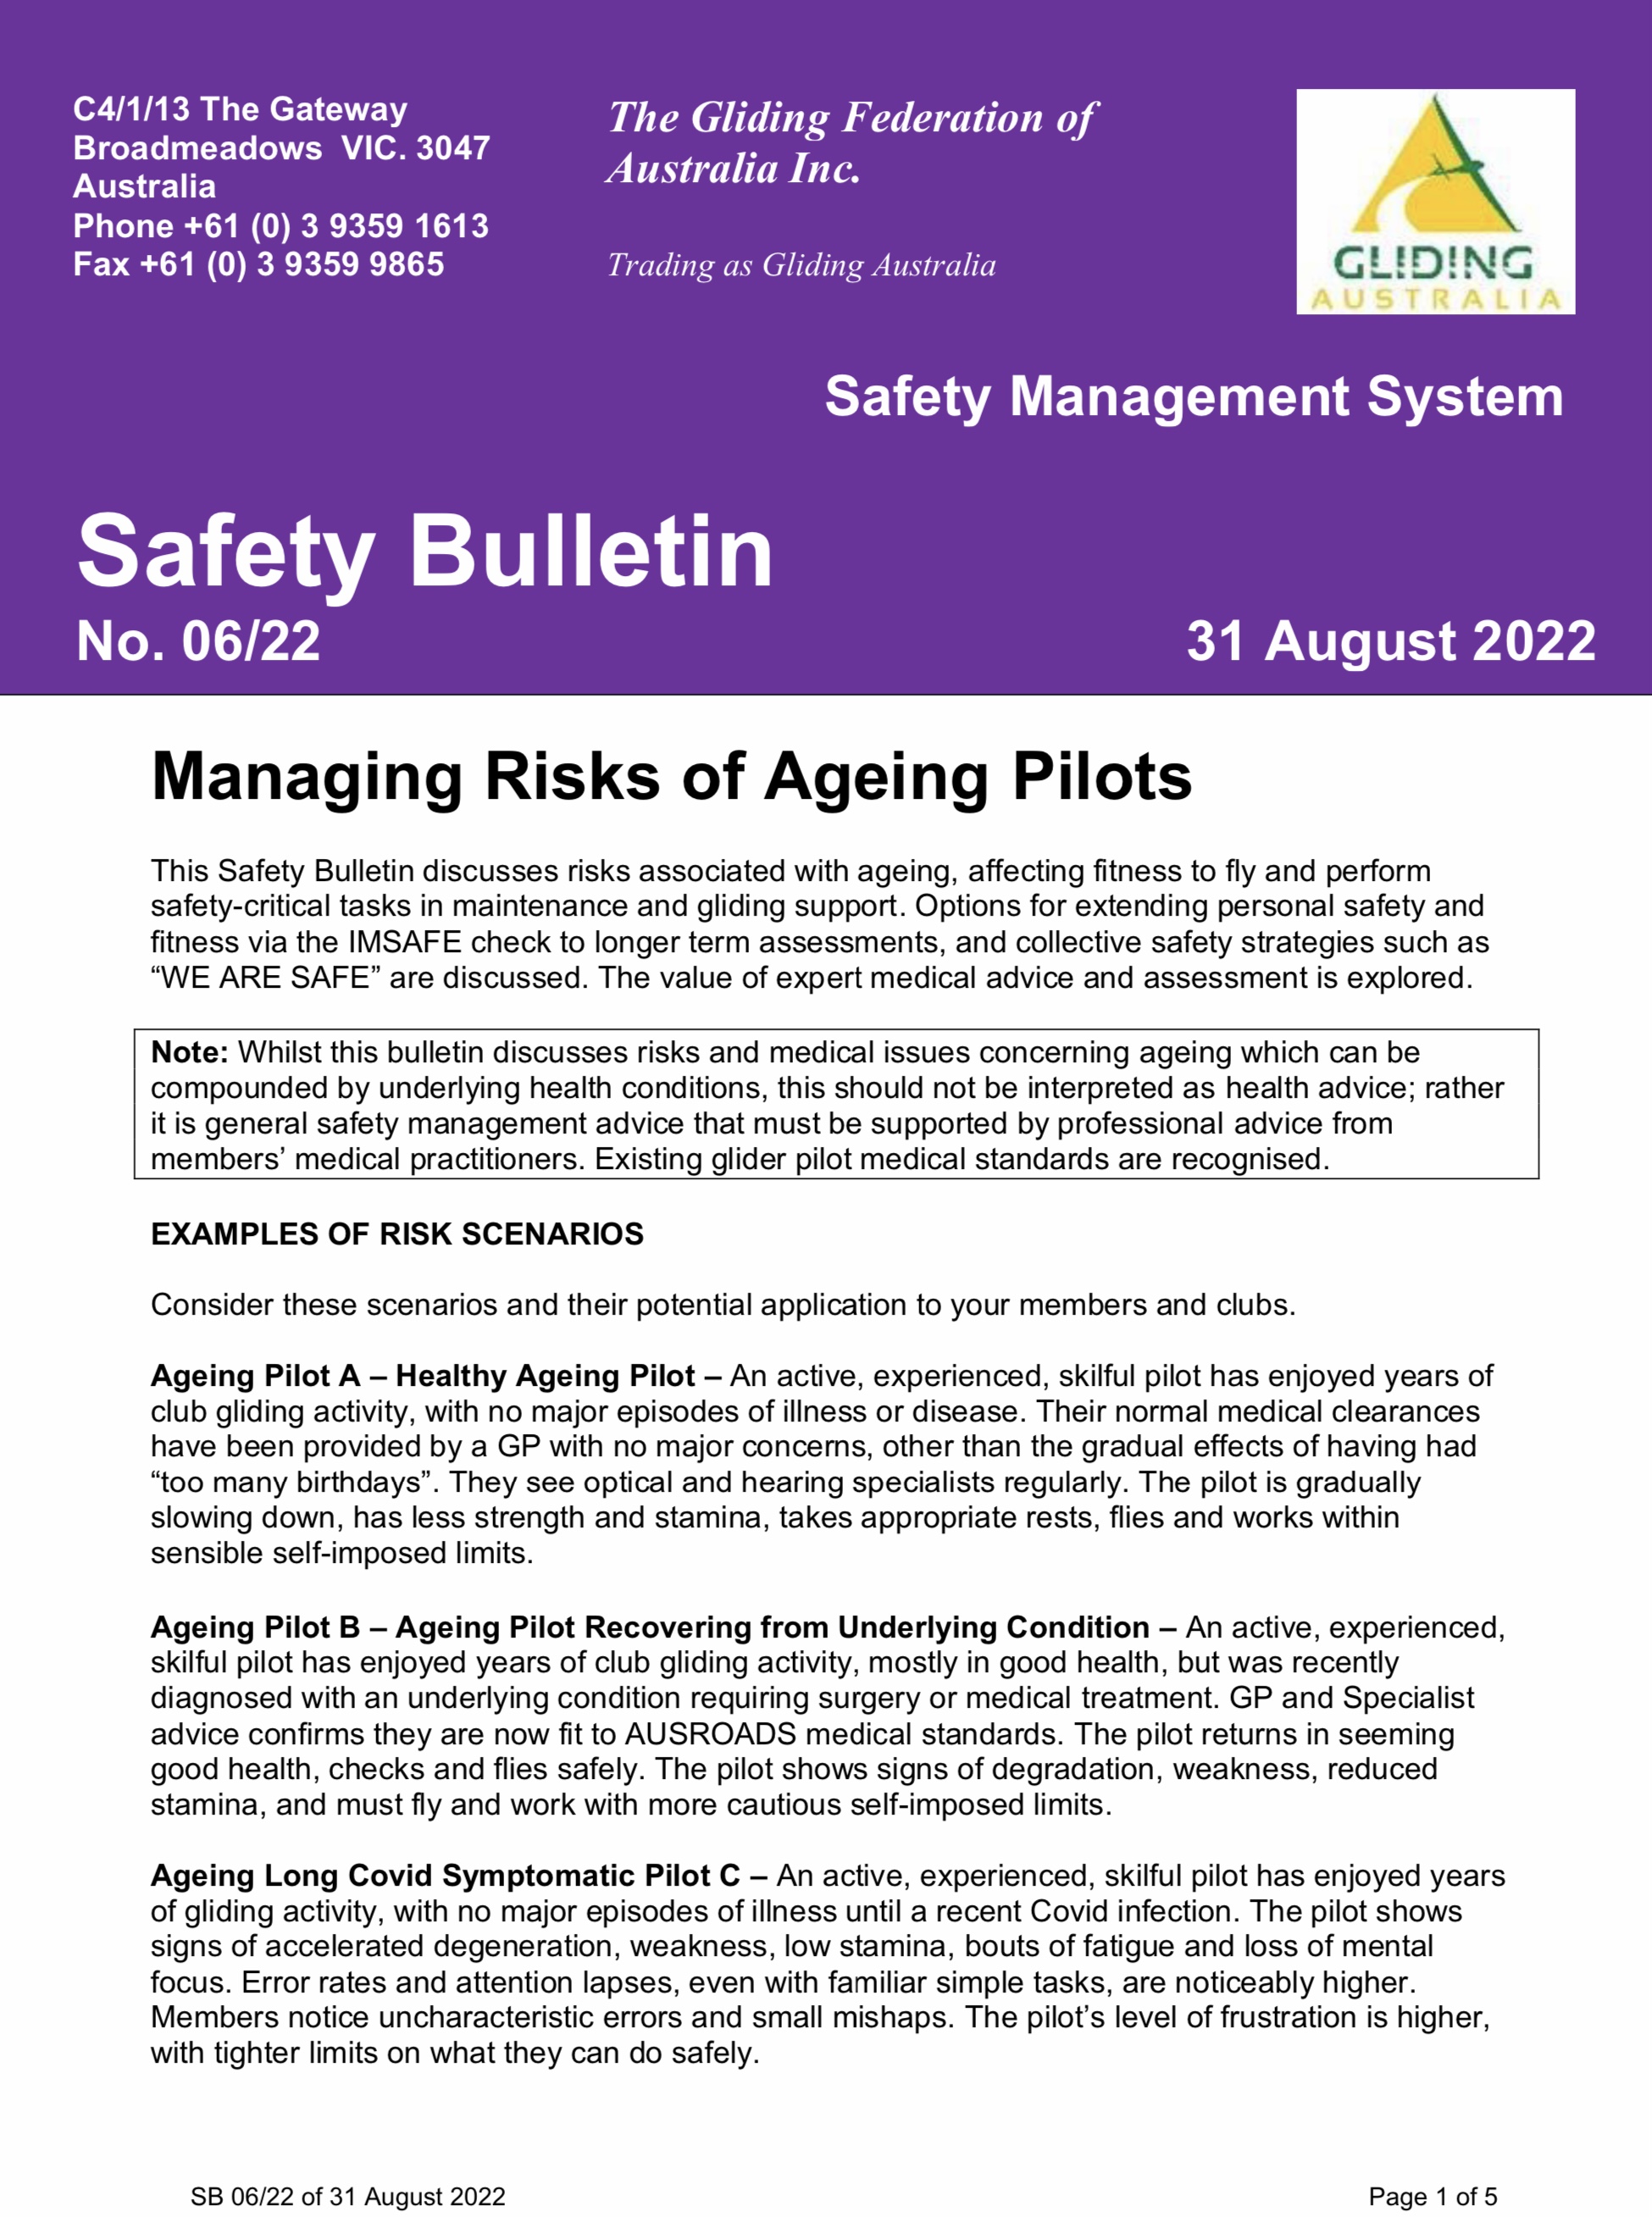 SB 06 22 Managing Risks of Ageing Pilots